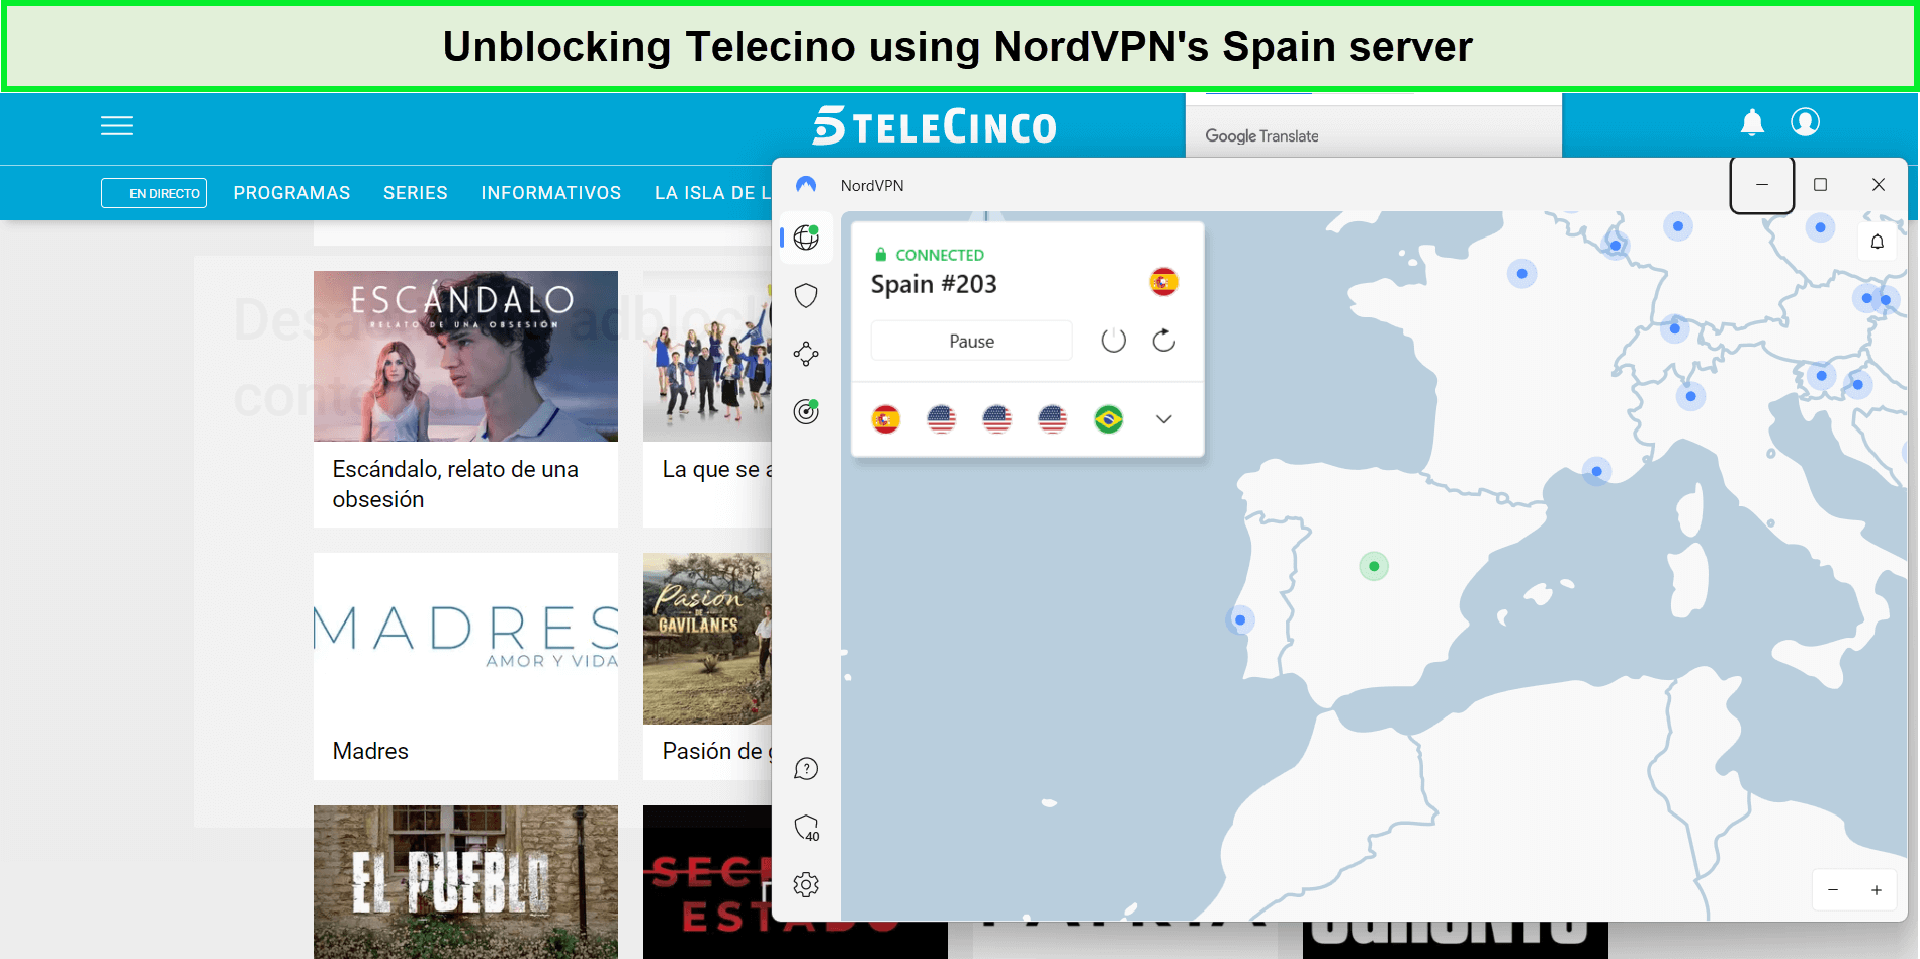 nordvpn-unblocked-telecinco-with-spanish-server-in-Netherlands